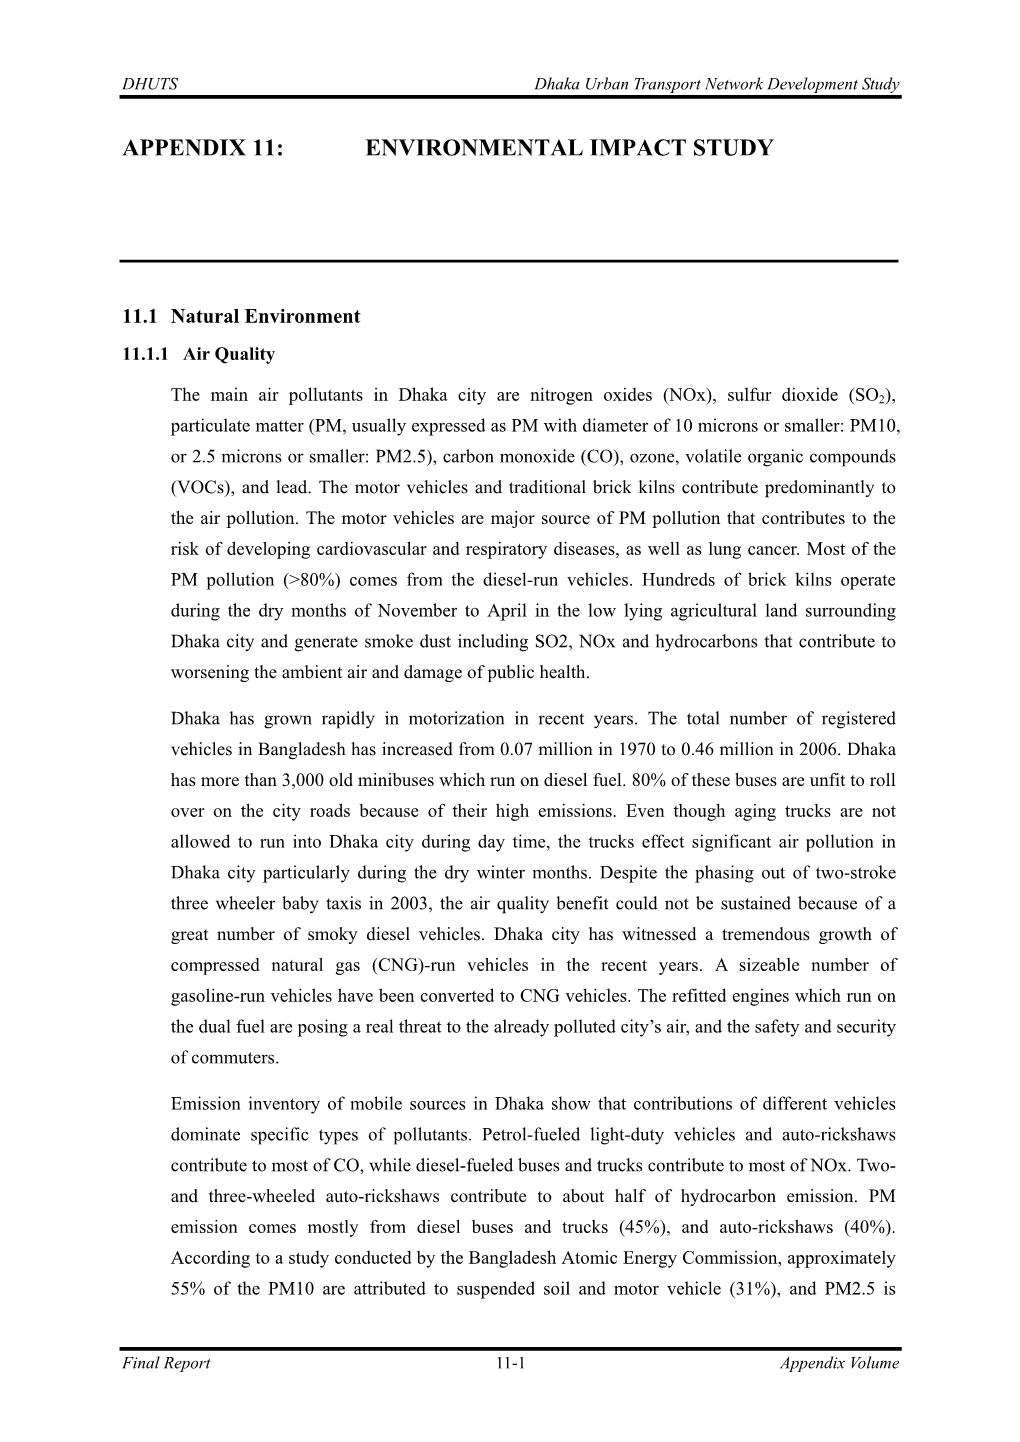 Appendix 11: Environmental Impact Study